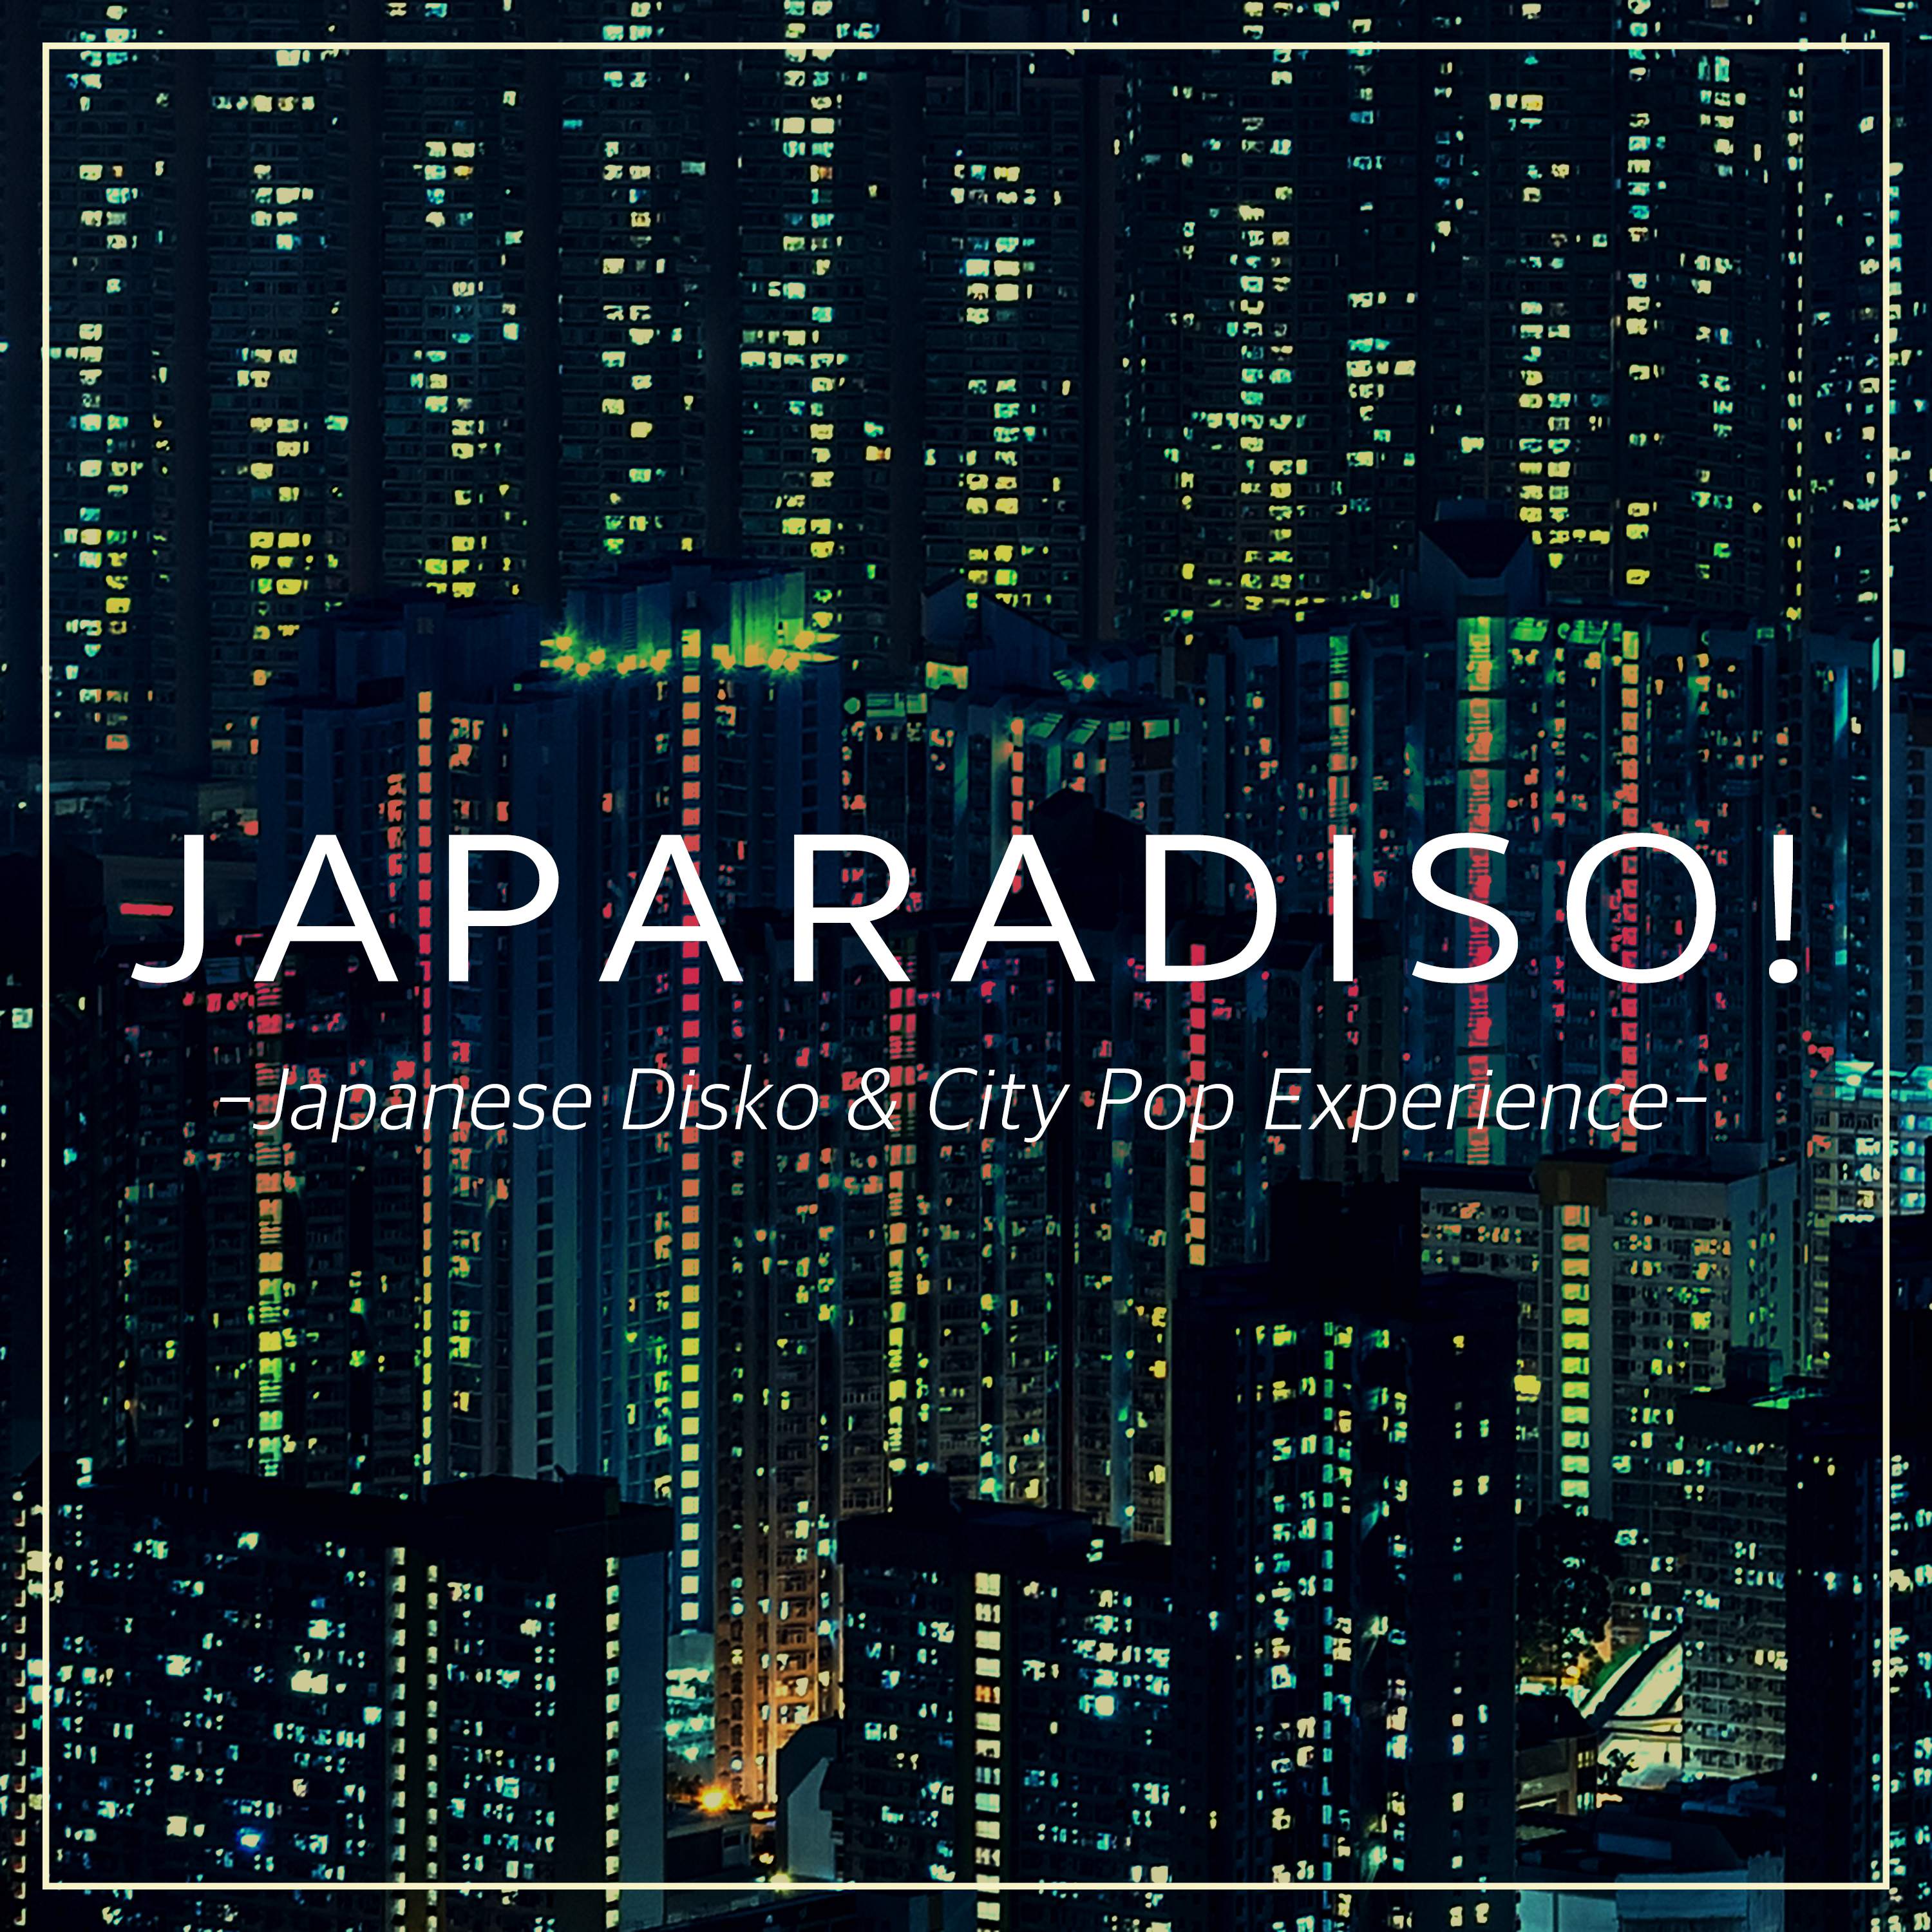 Japaradiso! -Japanese Disko & City Pop Experience- - Página frontal